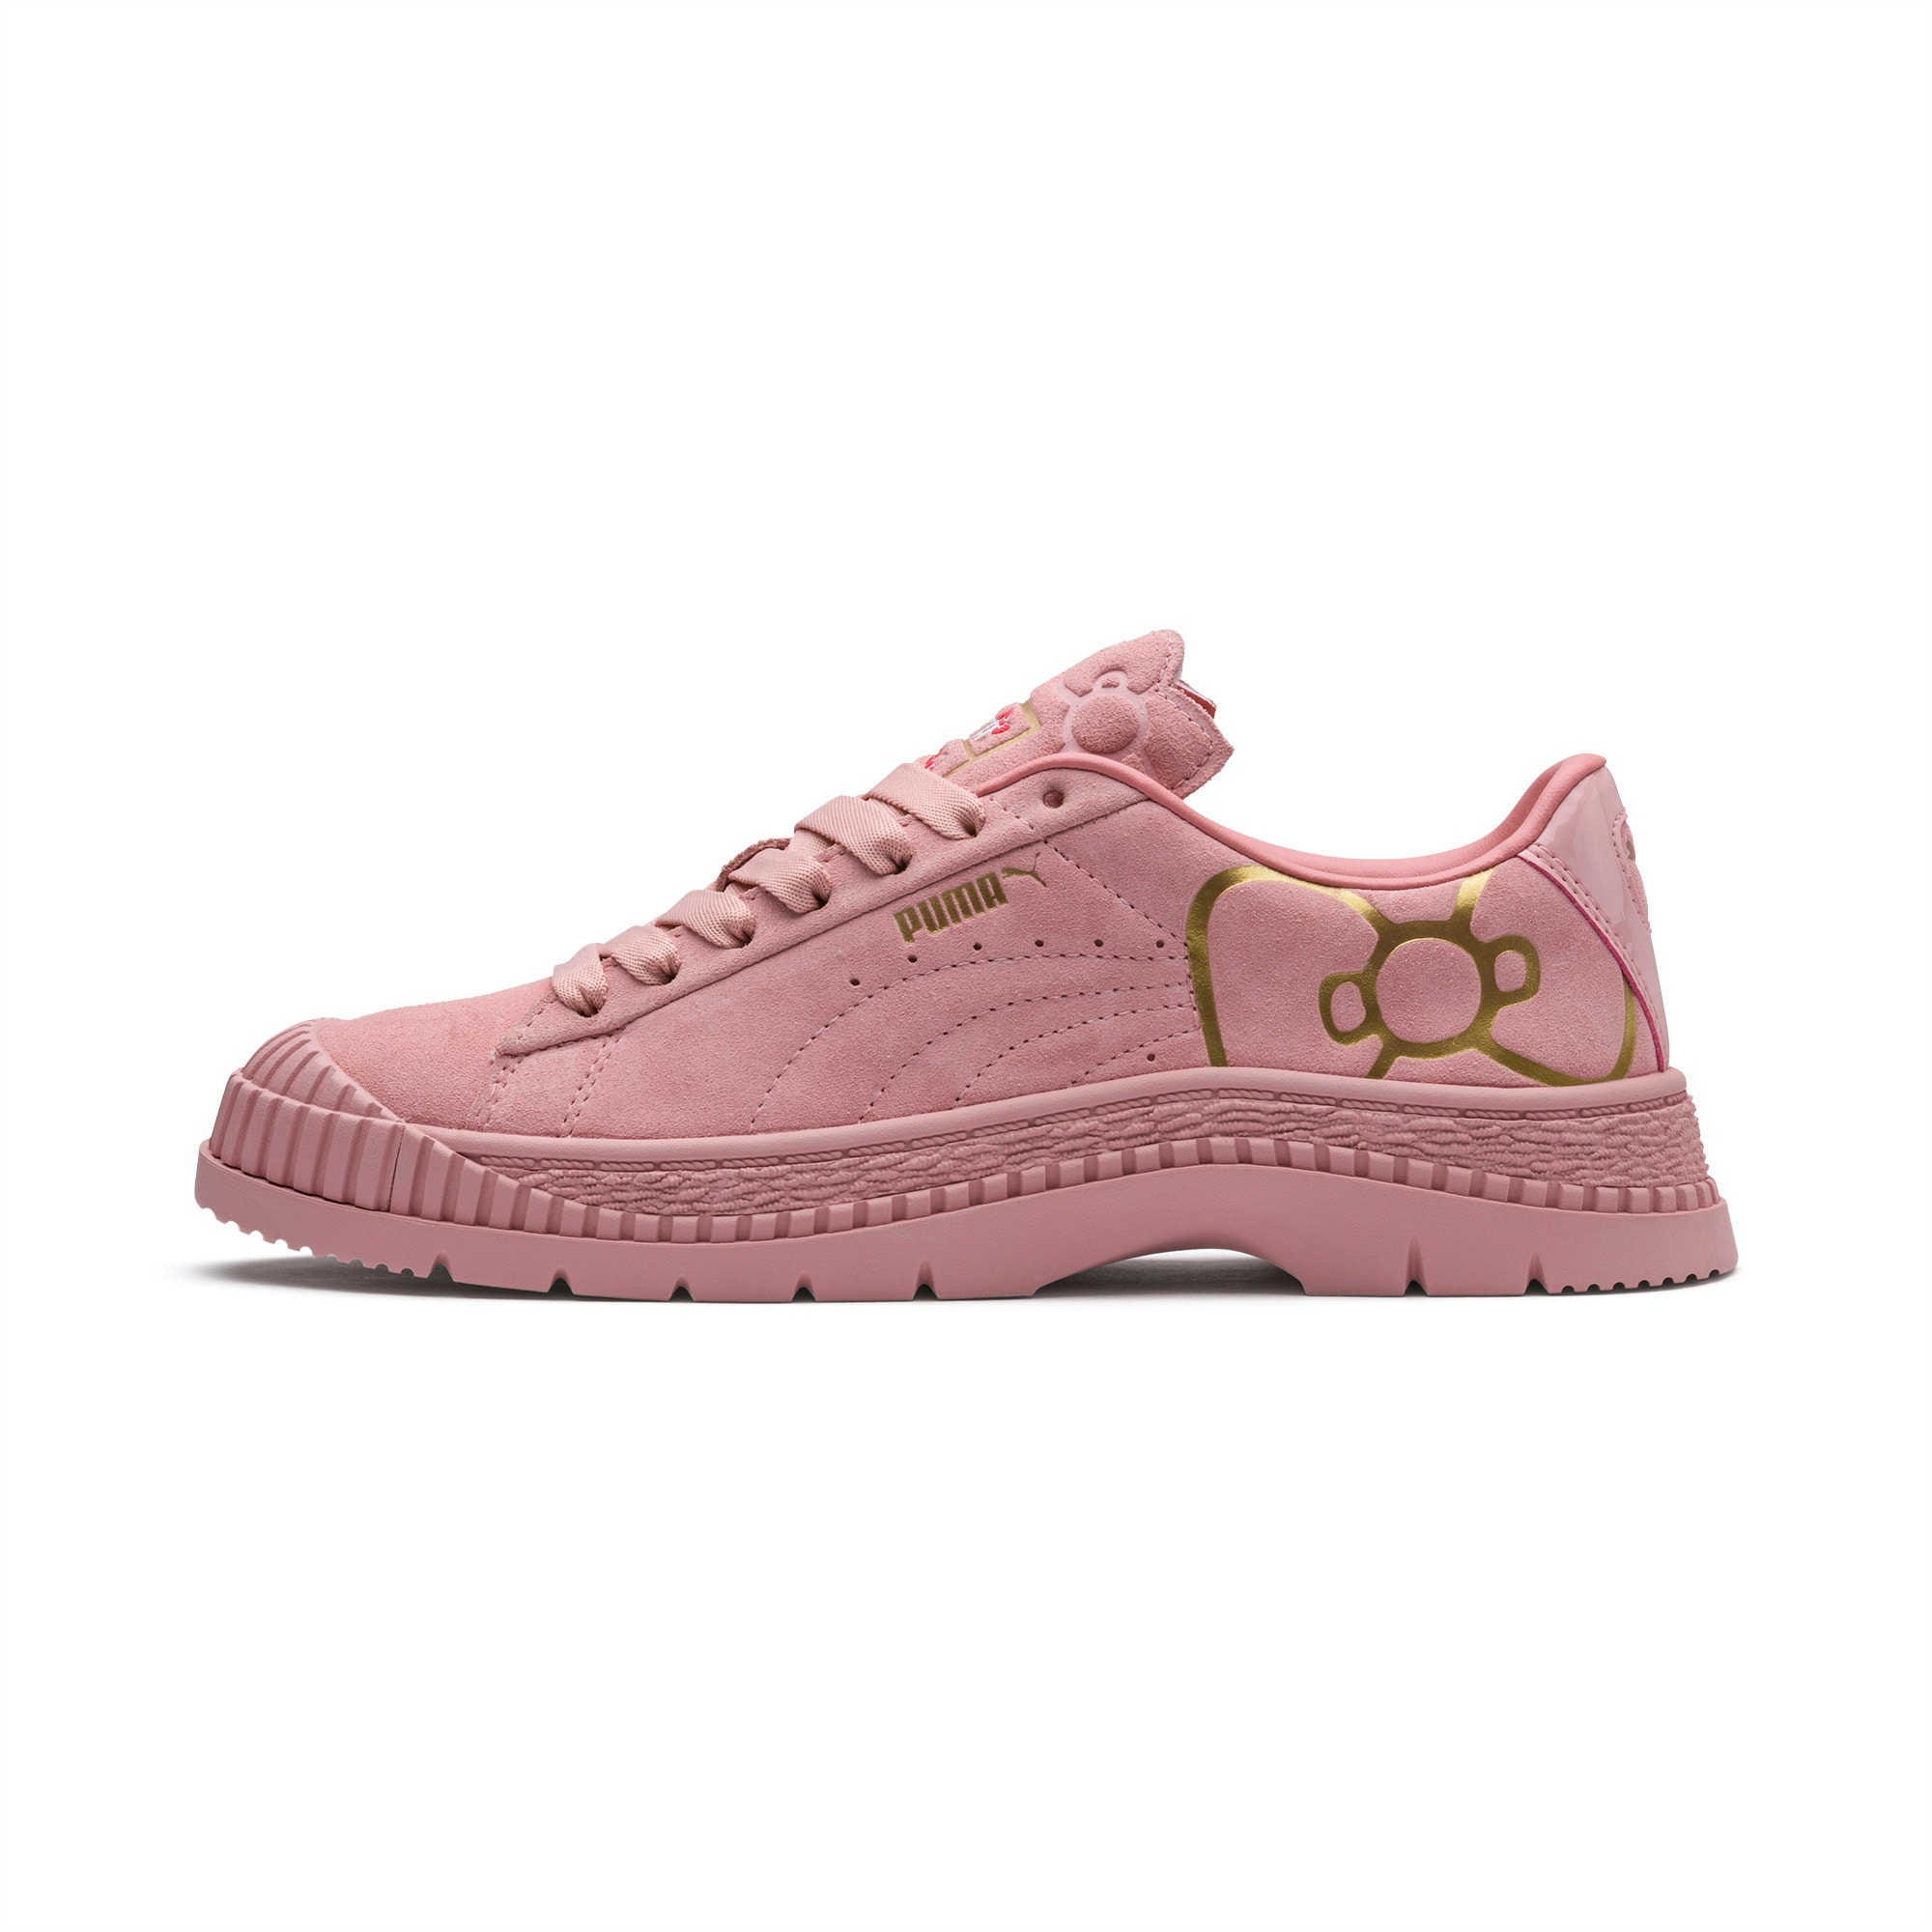 puma pink lace shoes